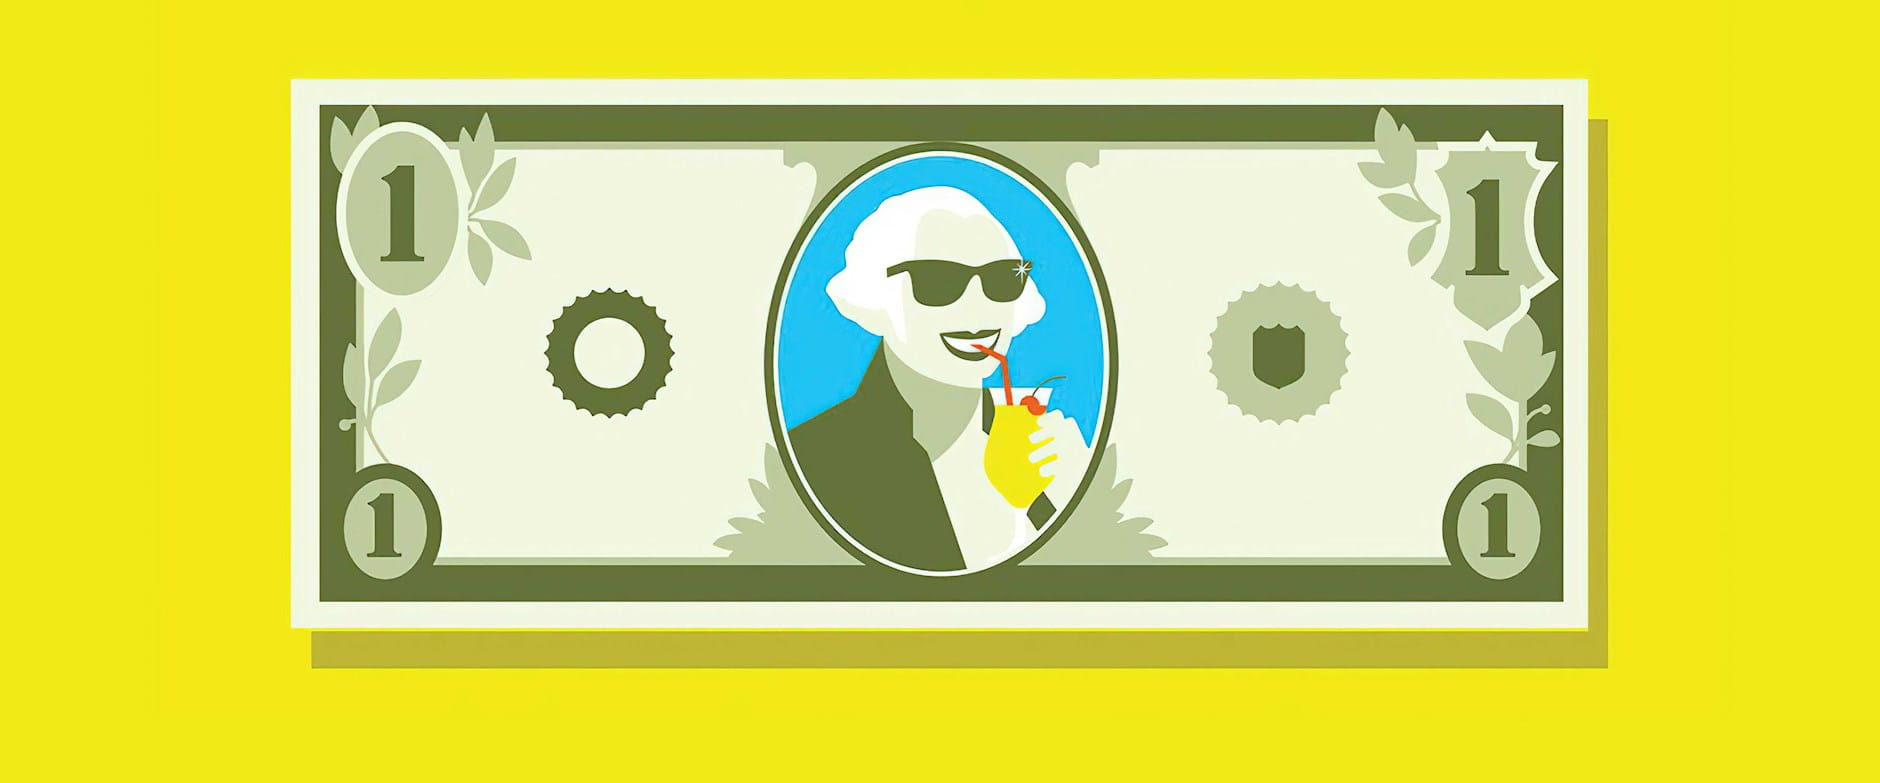 George Washington drinking a cocktail on the dollar bill